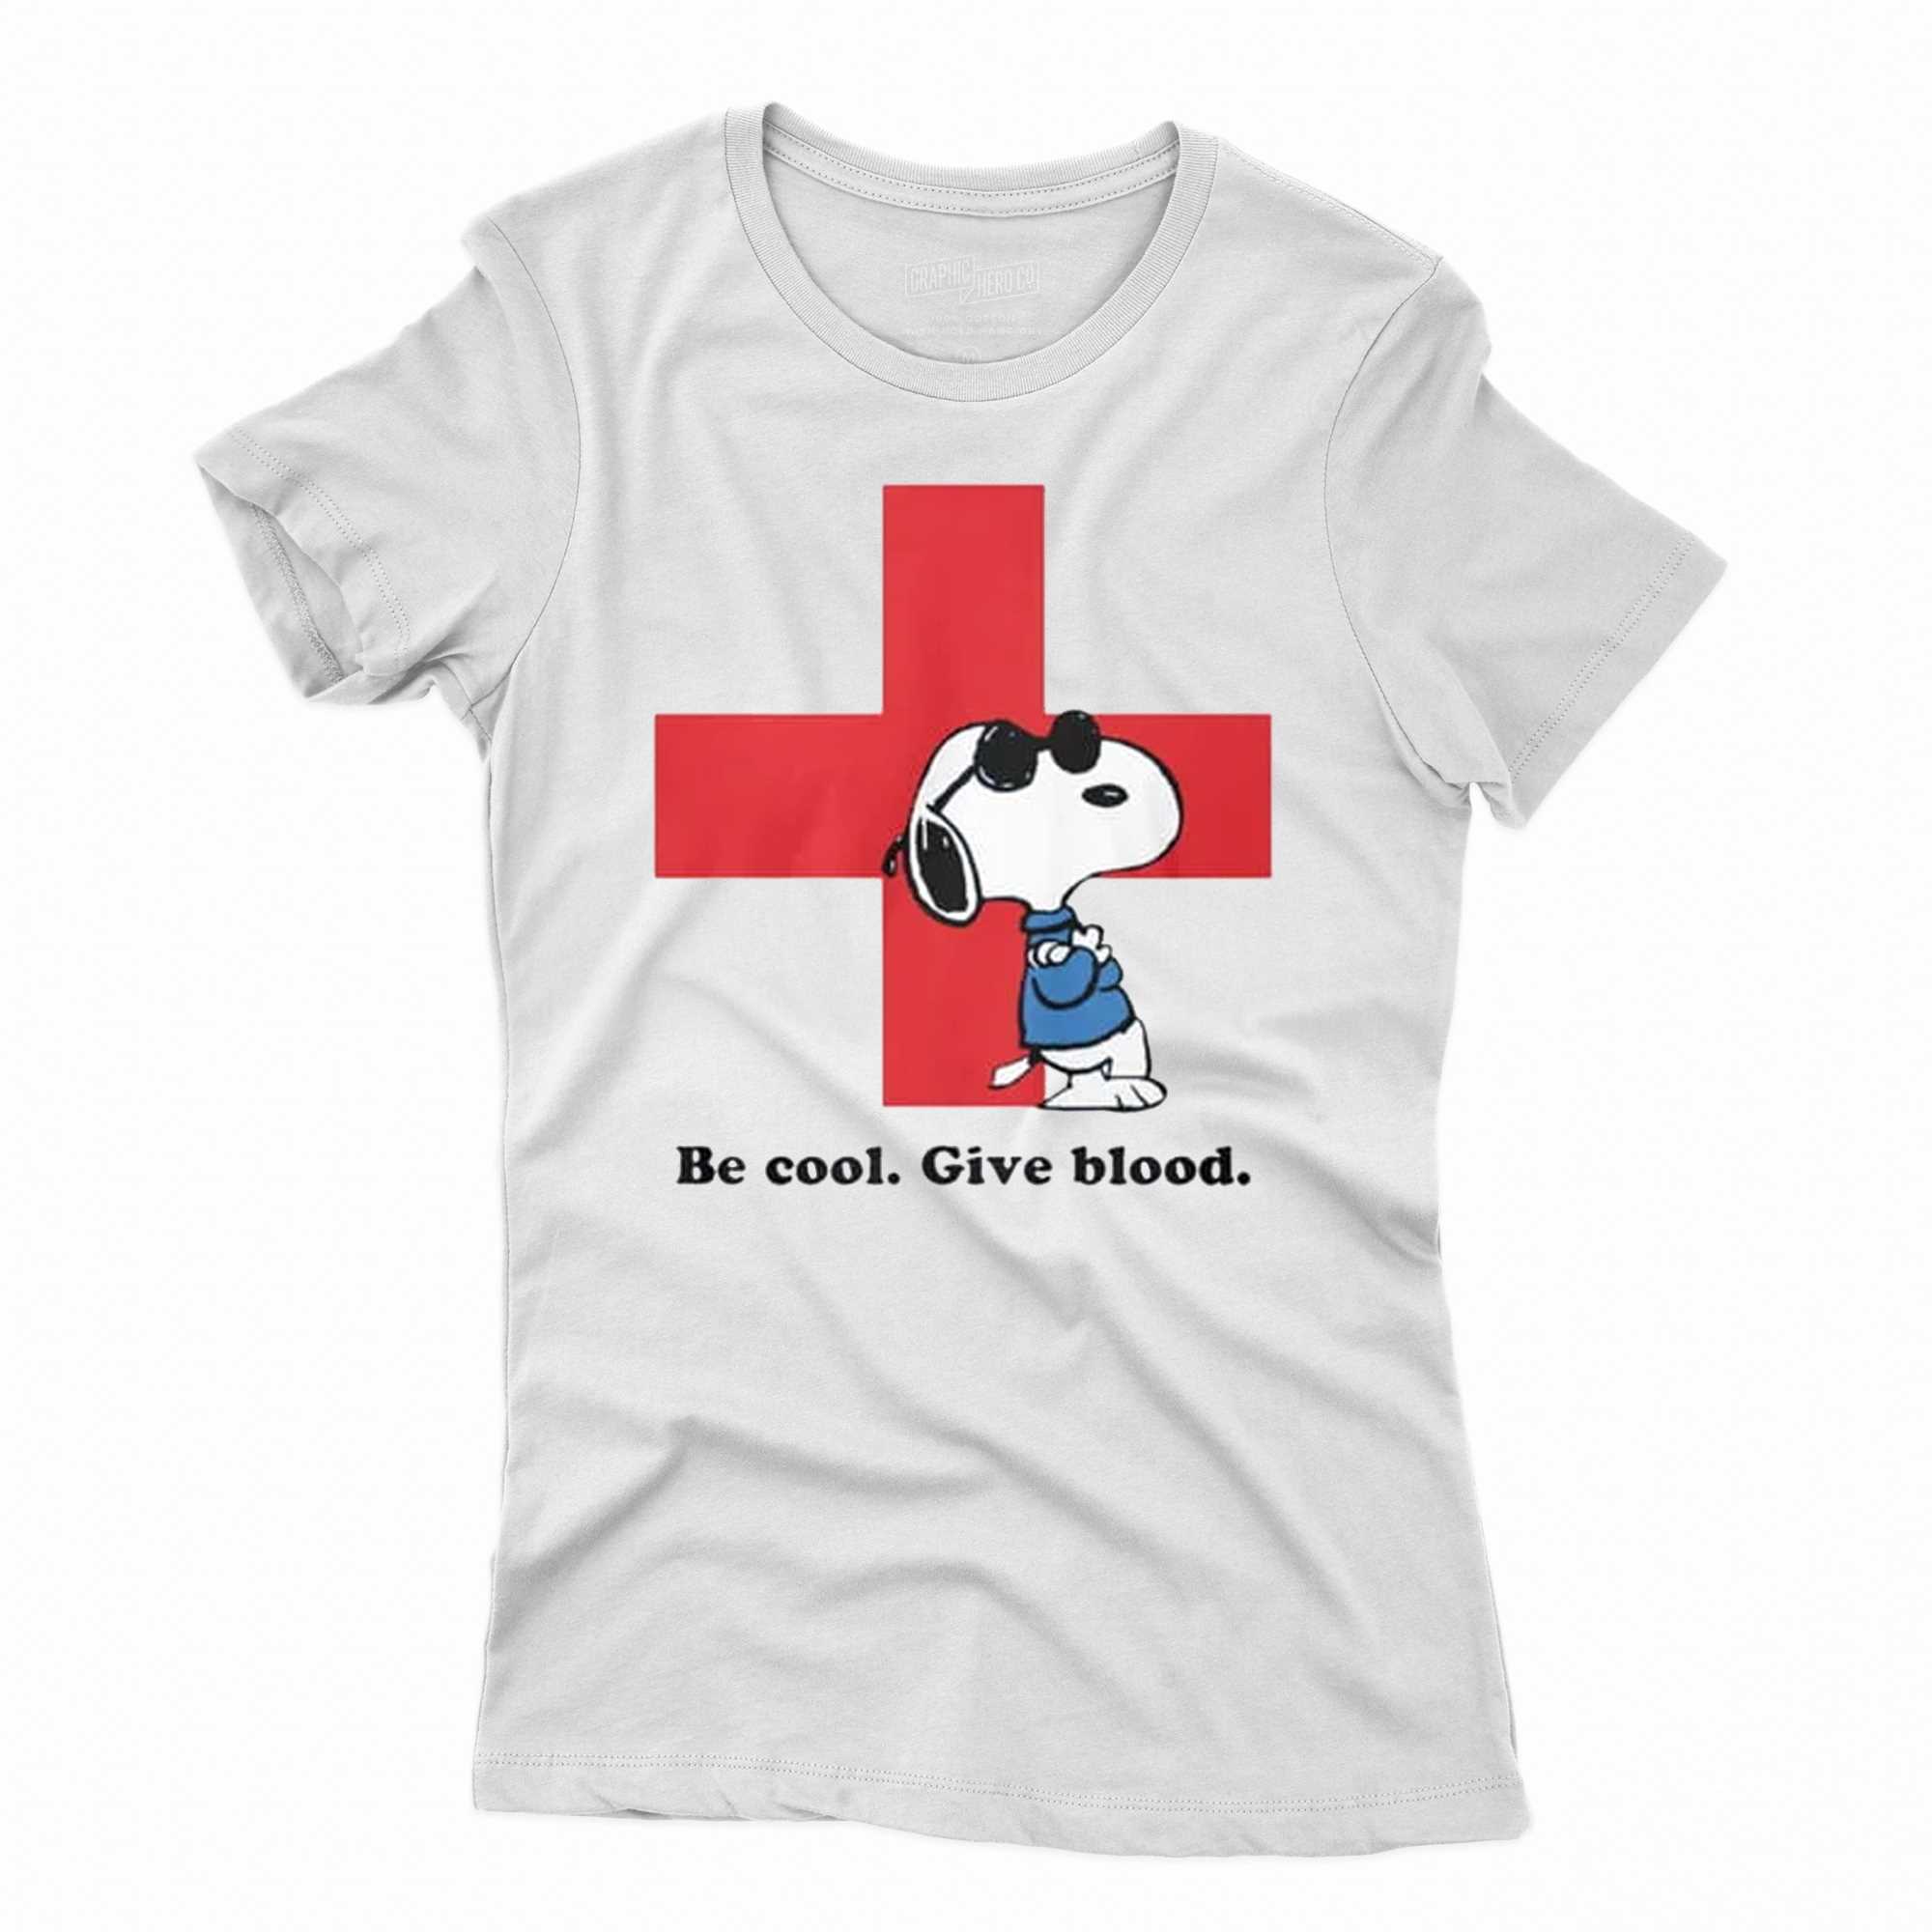 Blood Donation T-shirt - Shibtee Clothing